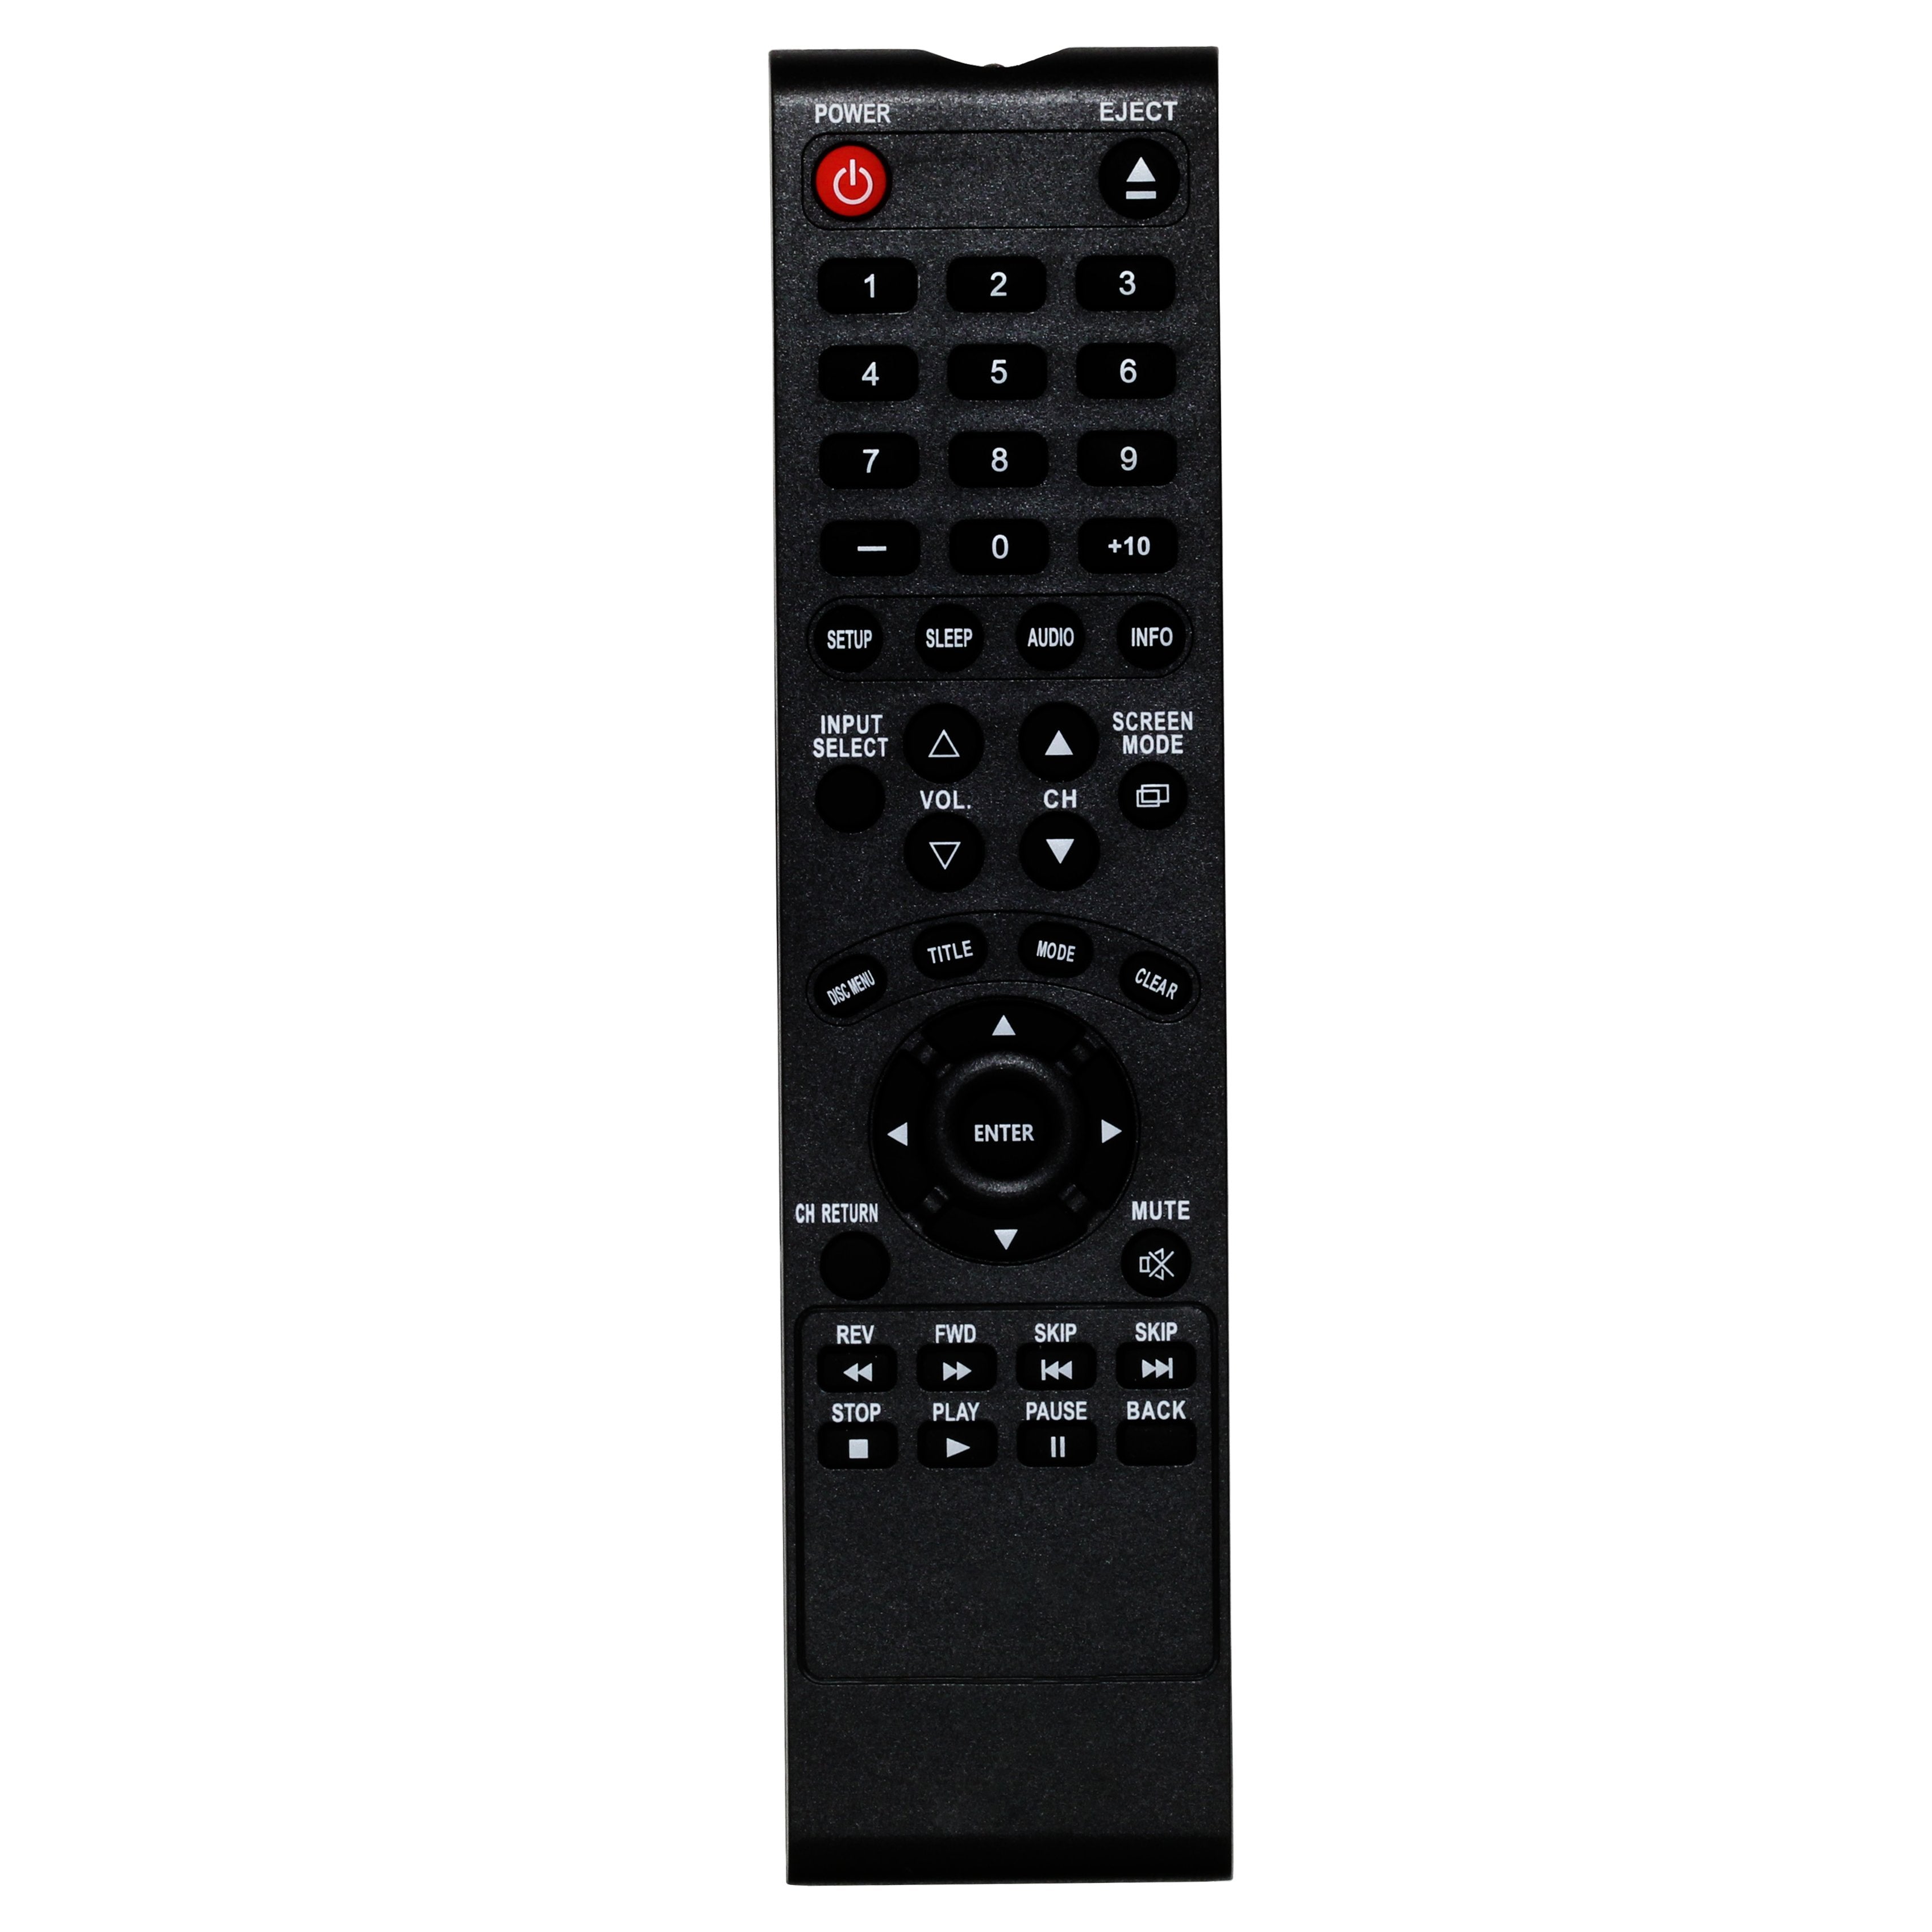 Sylvania RLF652PE02  TV Remote